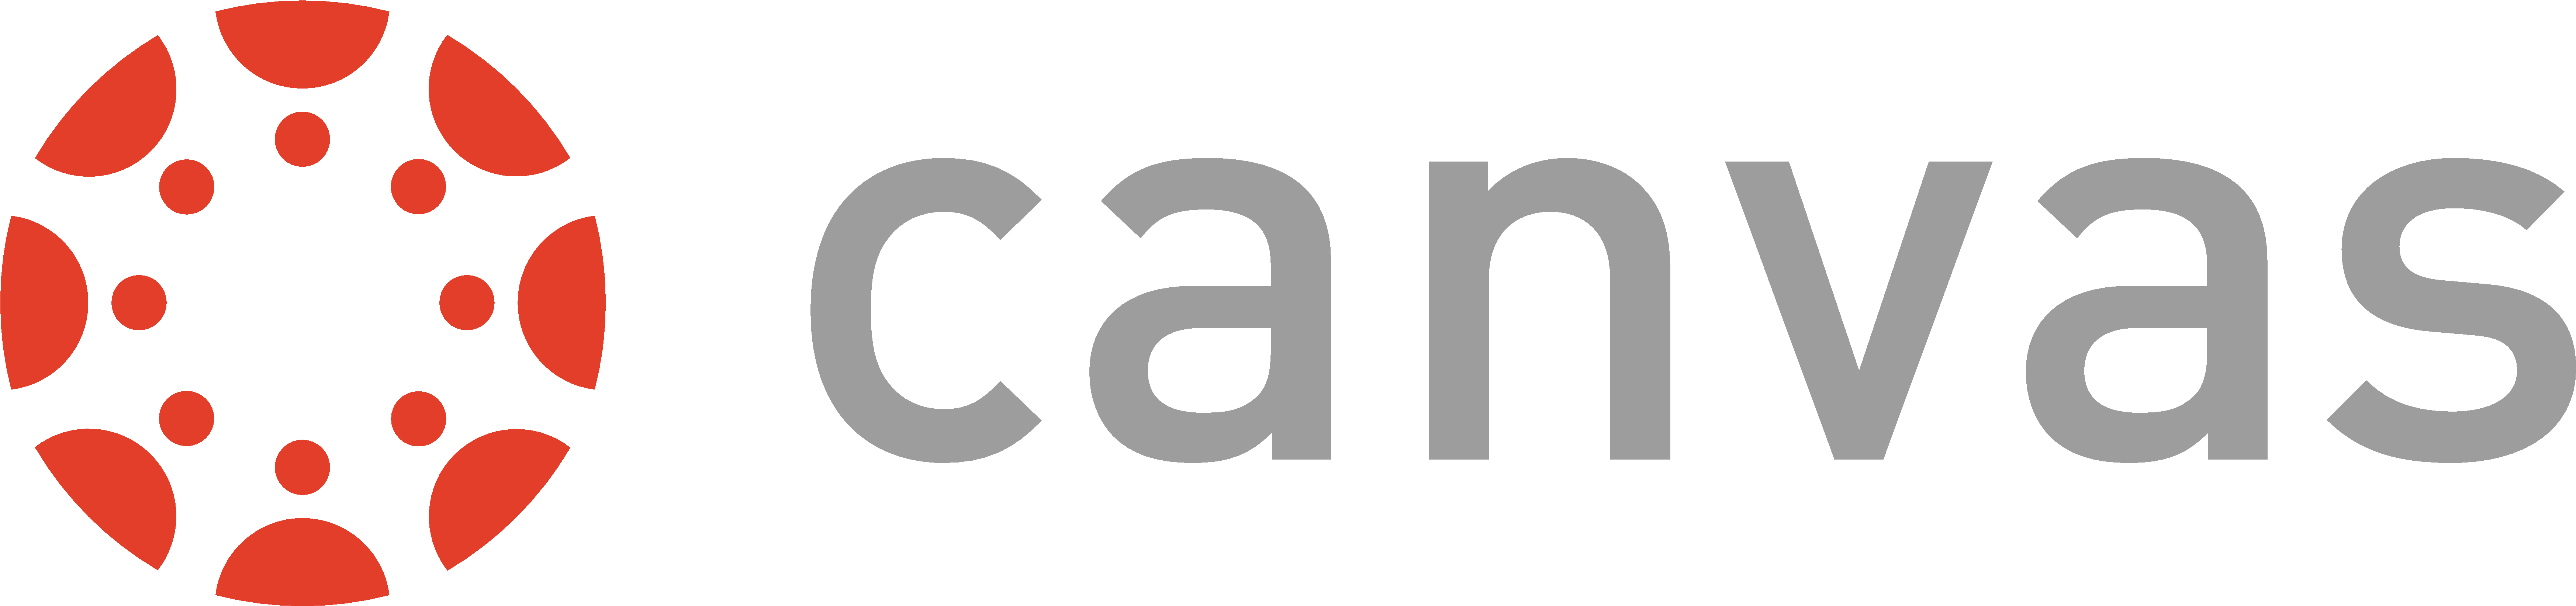 Canvas Logo - Canvas Lms (7000x1653)